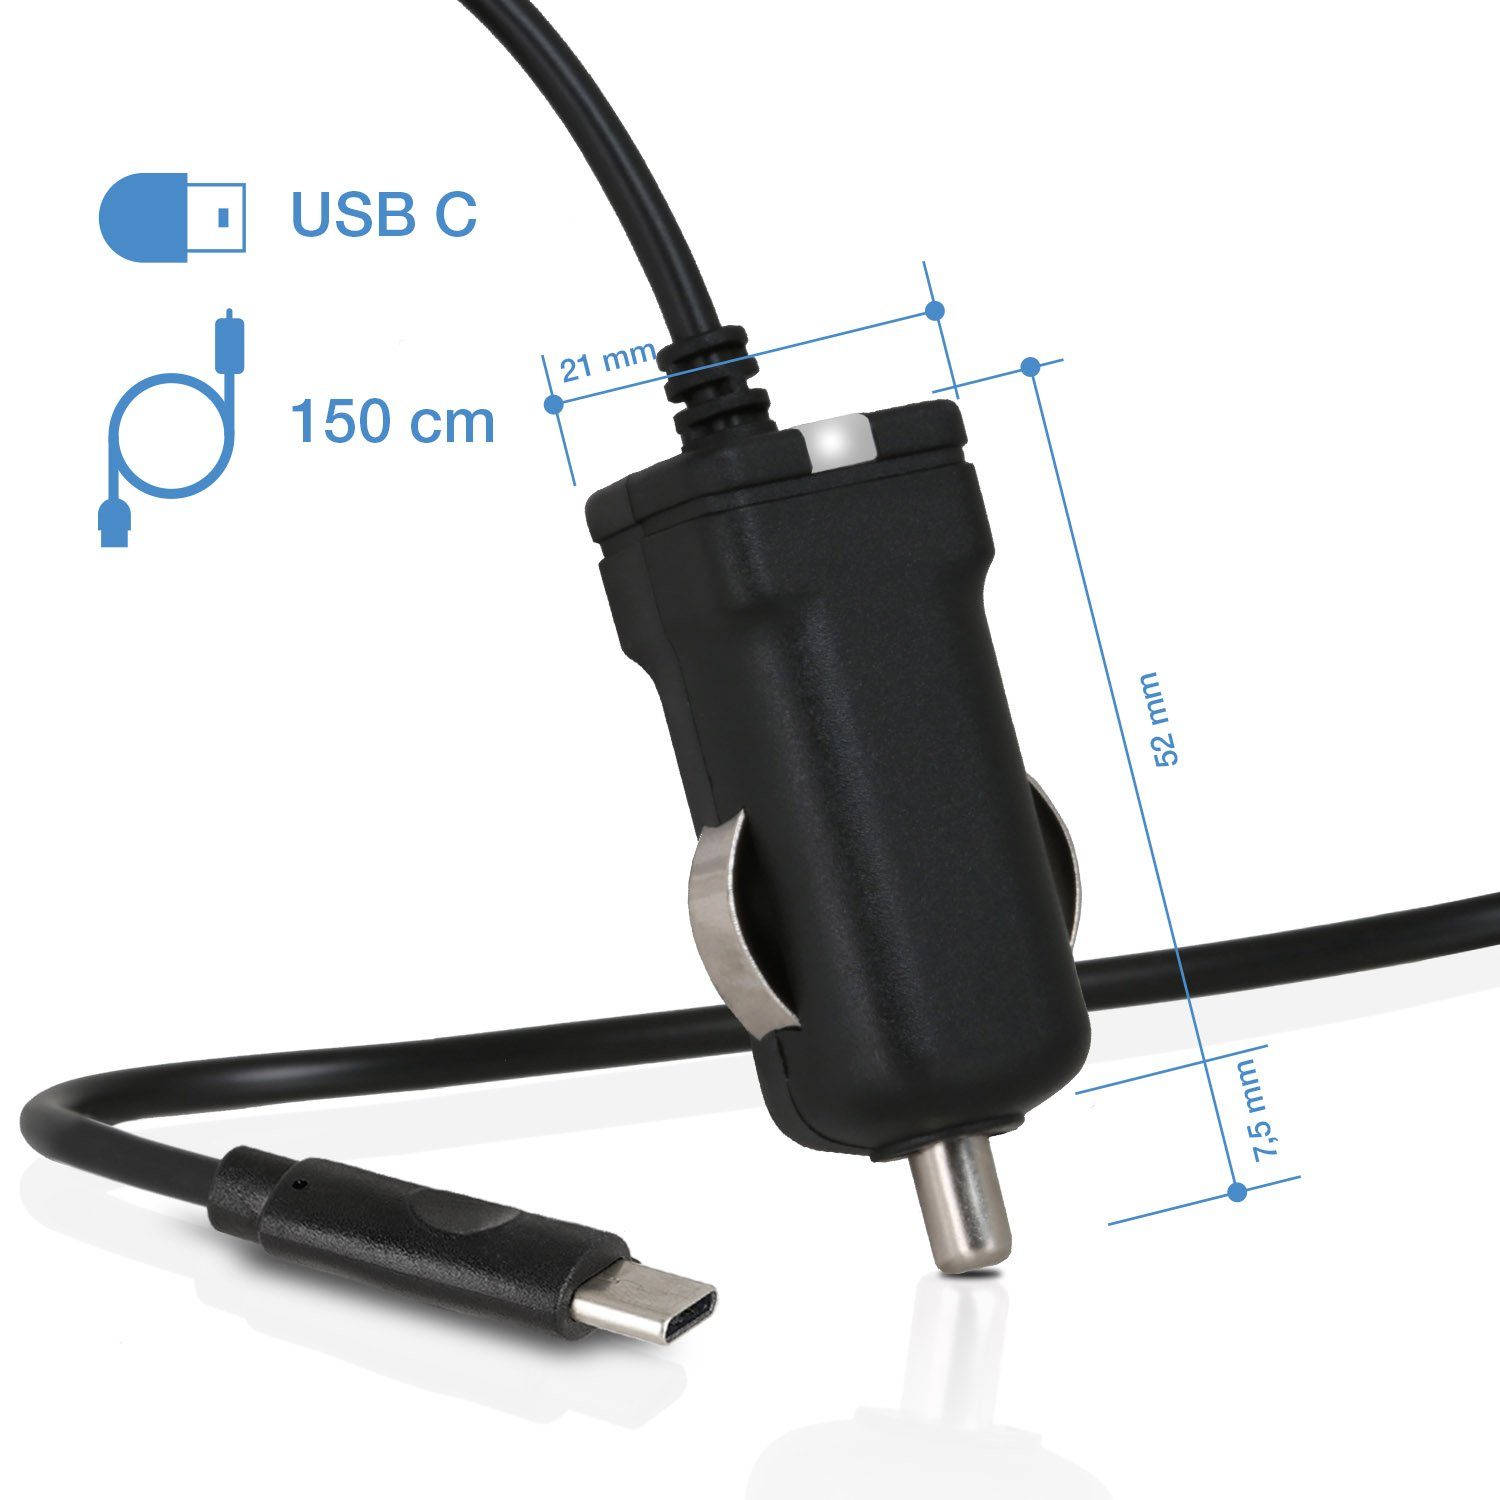 Wicked Chili 1,5m KFZ USB-C Ladekabel für Samsung Sony Huawei Xiaomi Auto-Adapter  Zigarettenanzünder-Stecker zu USB-C, 150 cm, LED Licht, KFZ USB Ladegerät  mit Typ C Stecker (150cm, 2.4A) kompatib